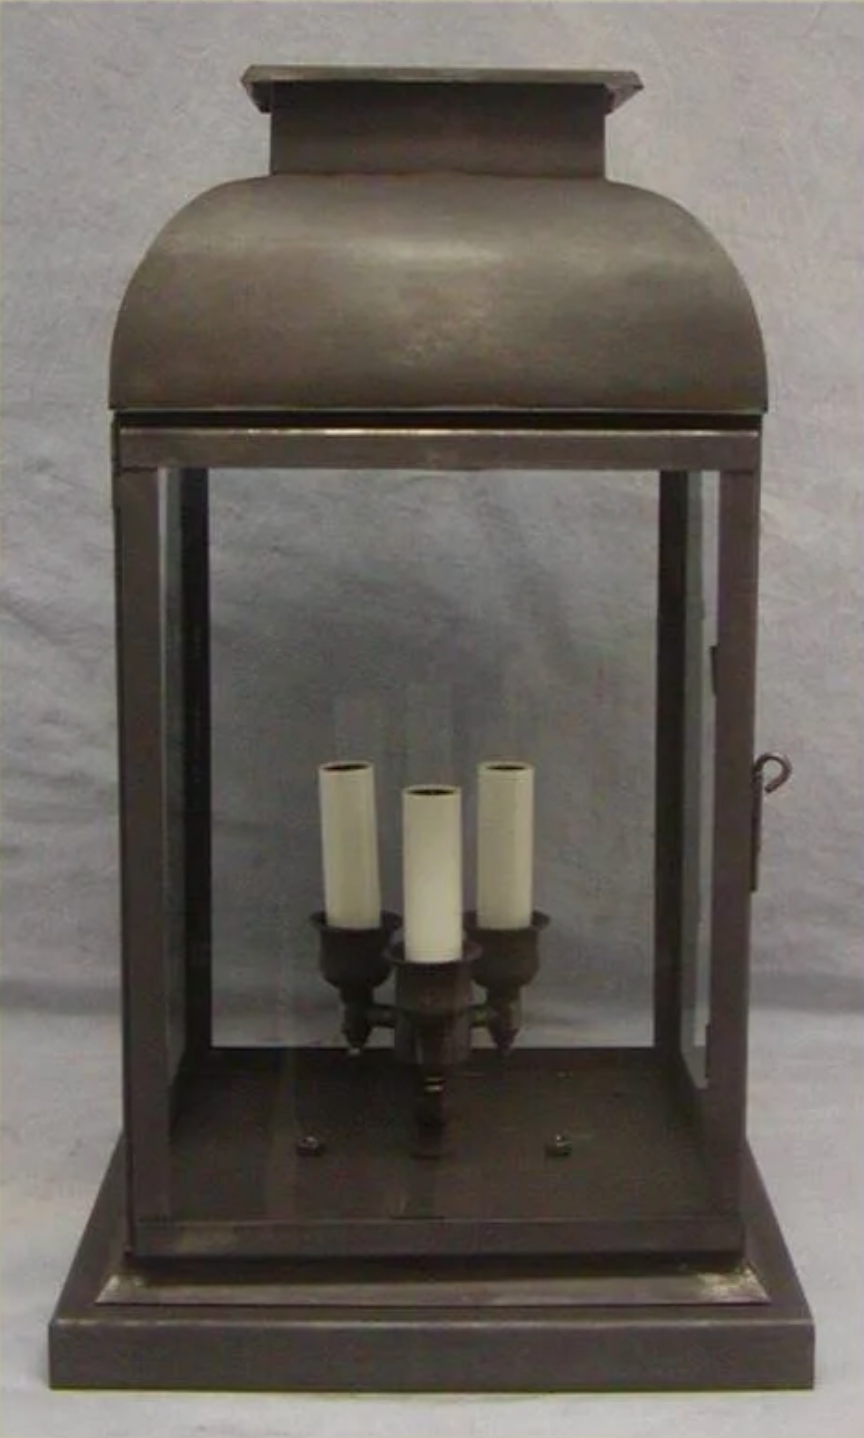 Meridian Outdoor Extra-Large PIER MOUNTED Lantern 3514PIER